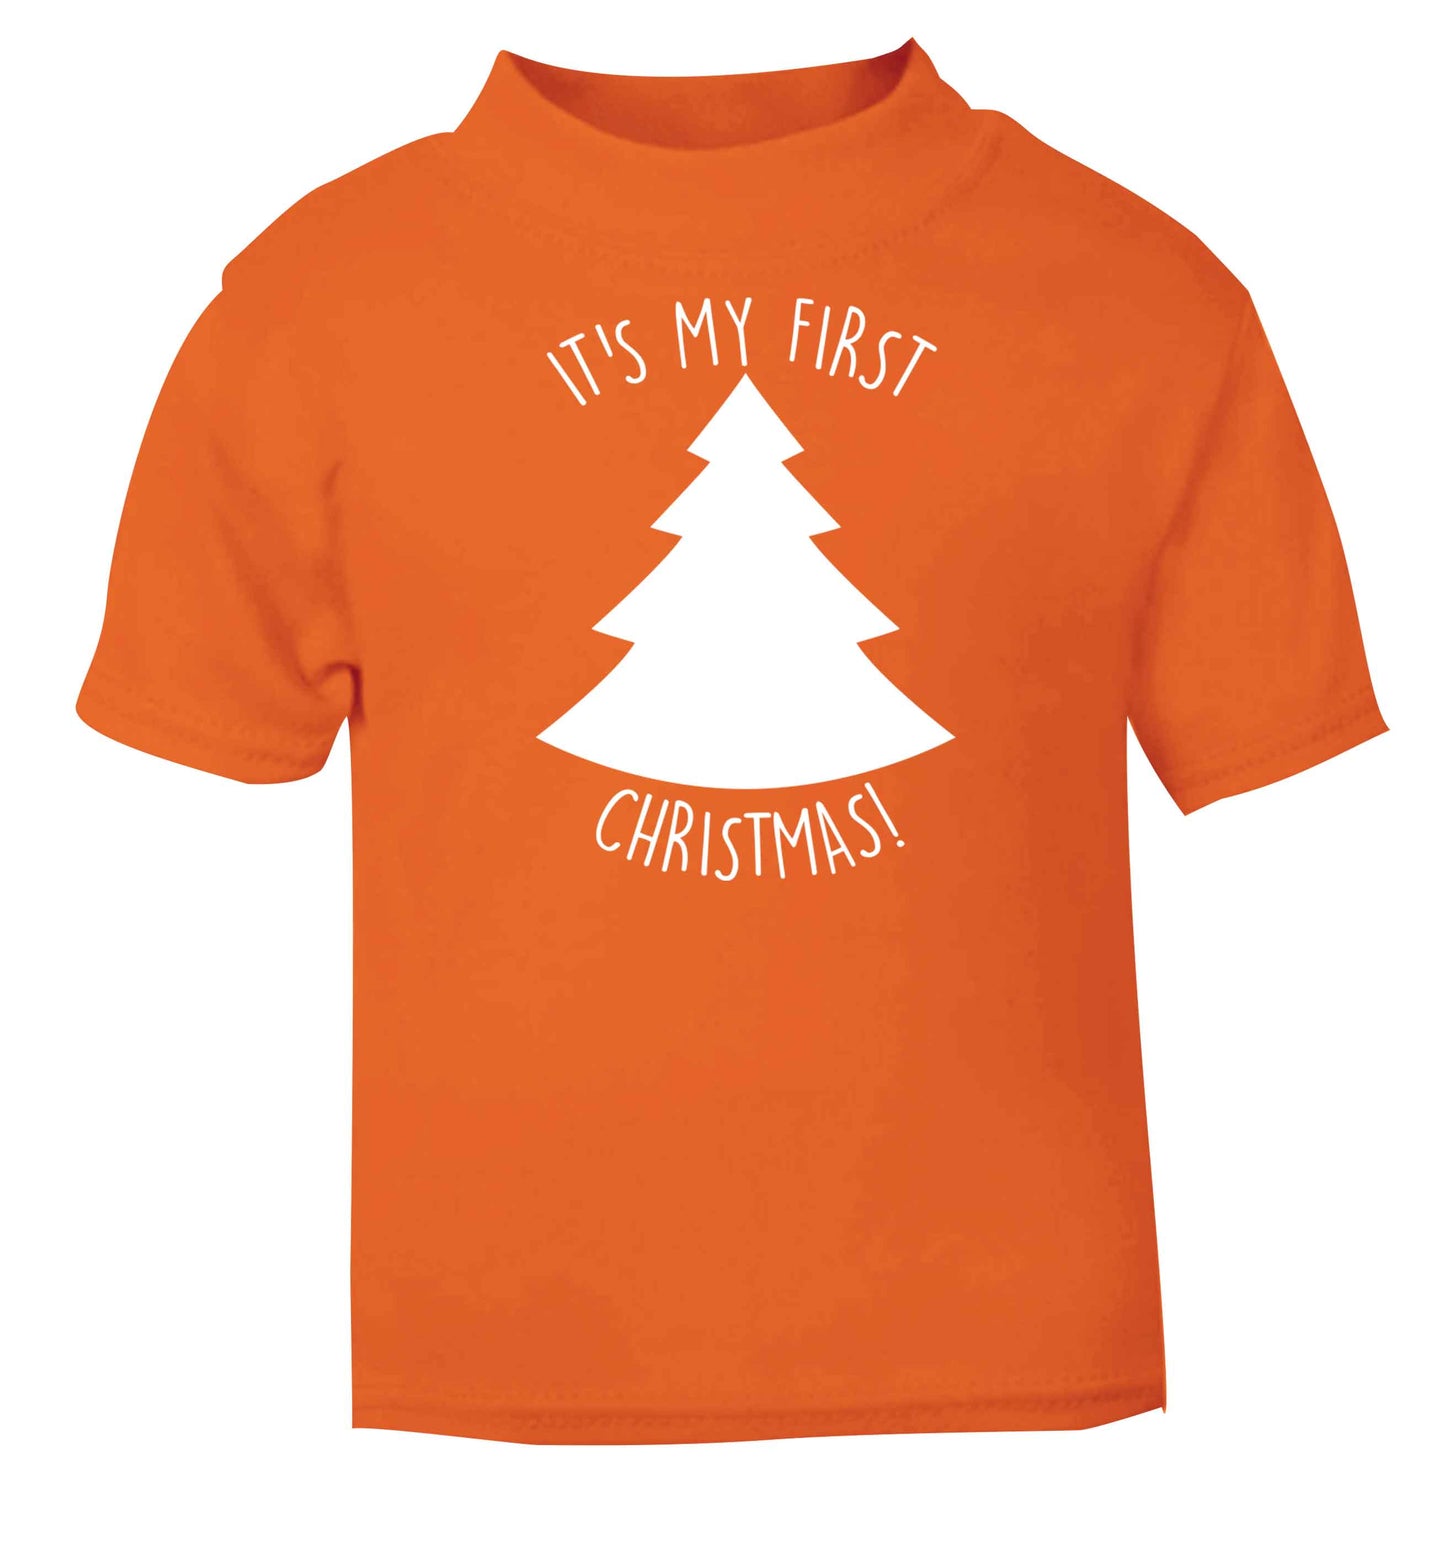 It's my first Christmas - tree orange baby toddler Tshirt 2 Years